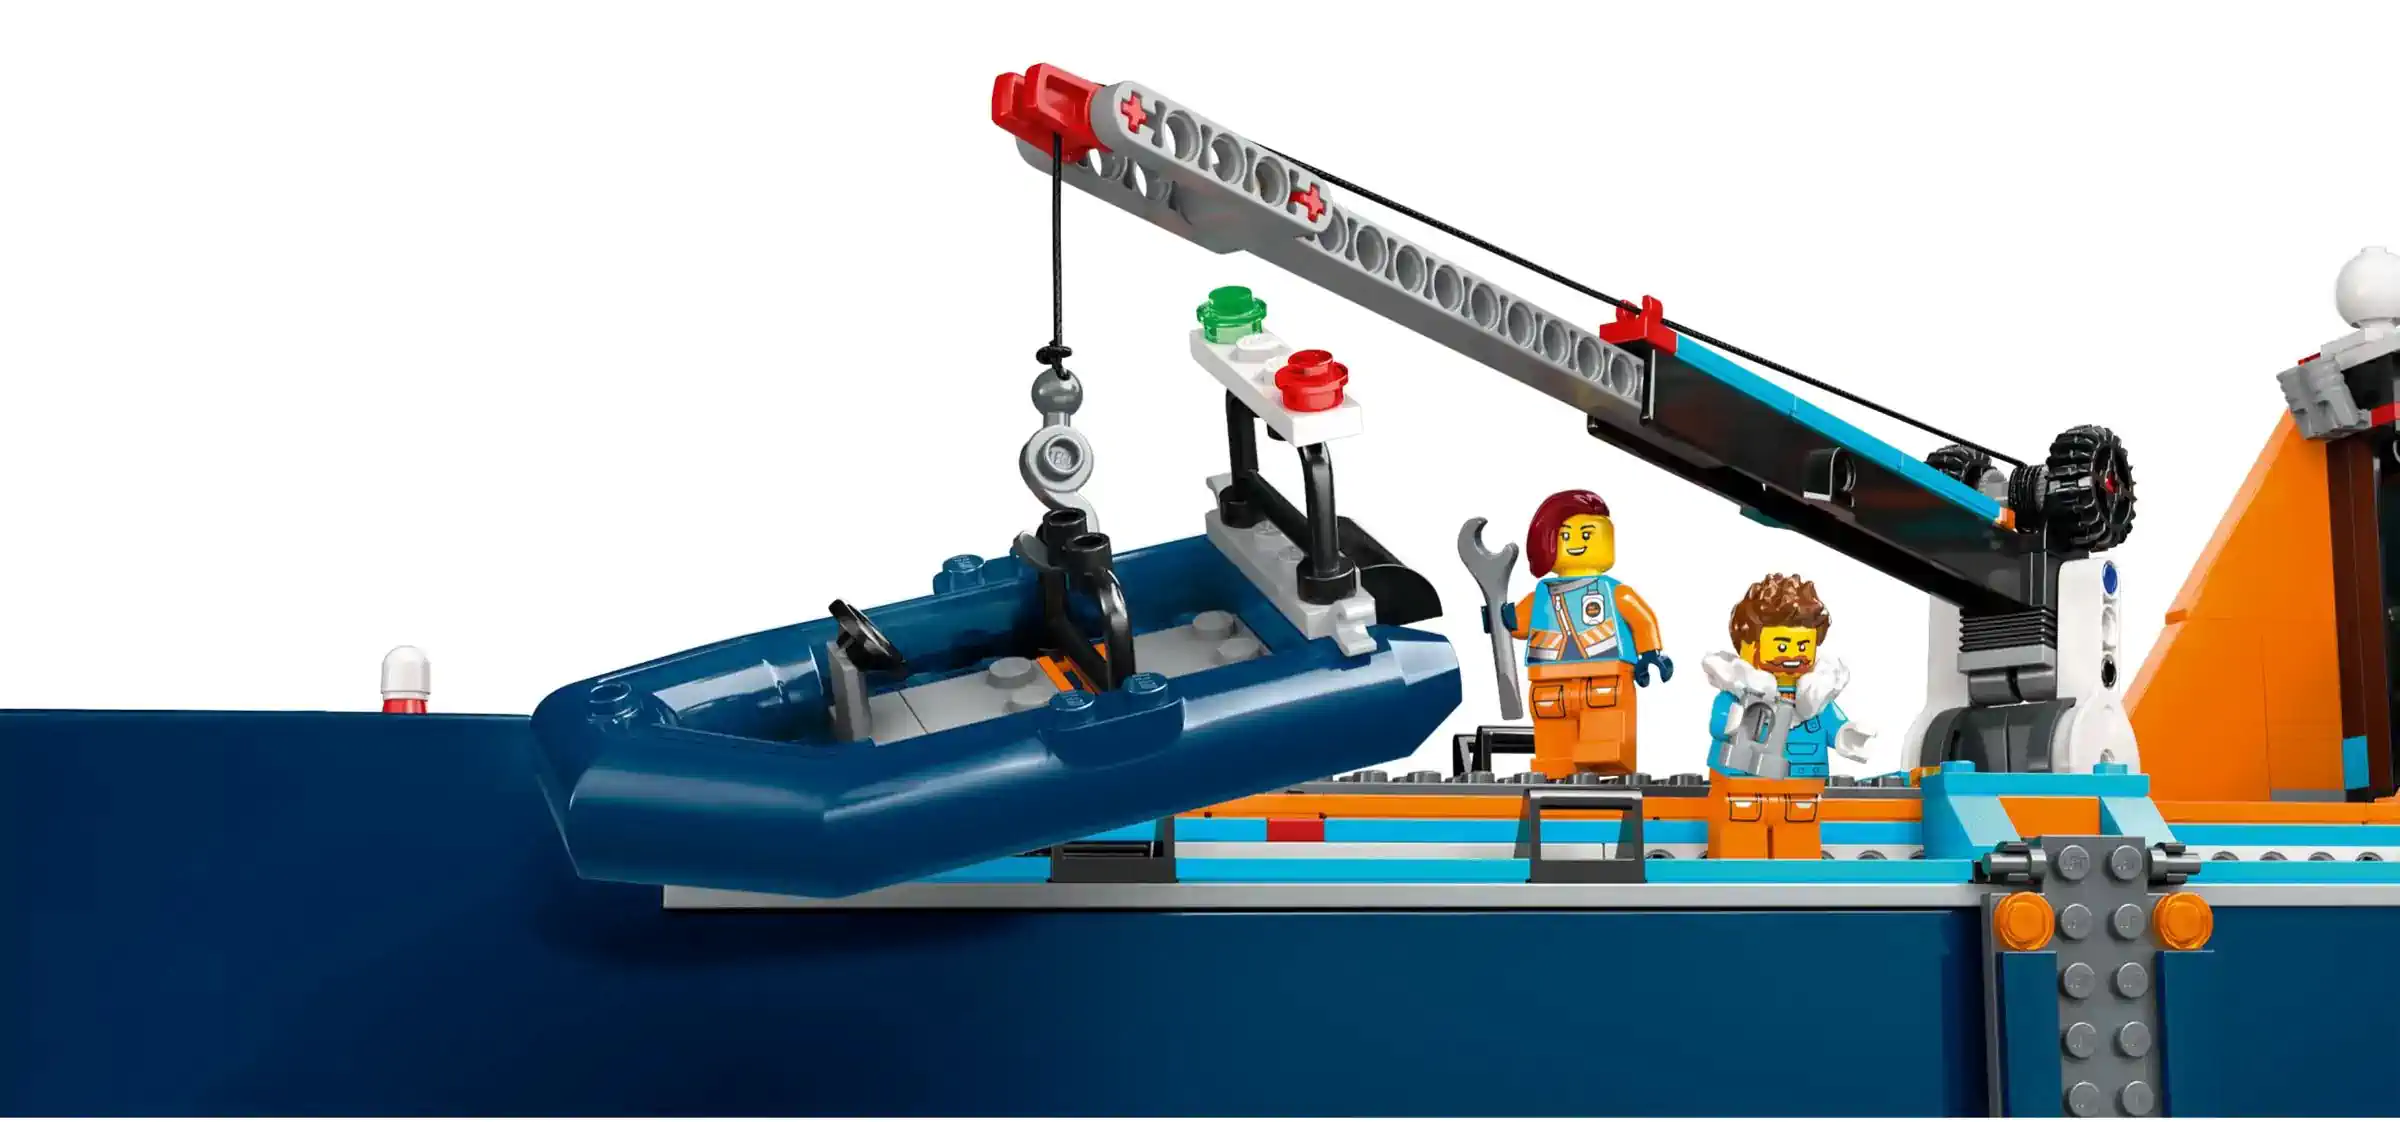 LEGO City Arktis-Forschungsschiff 60368